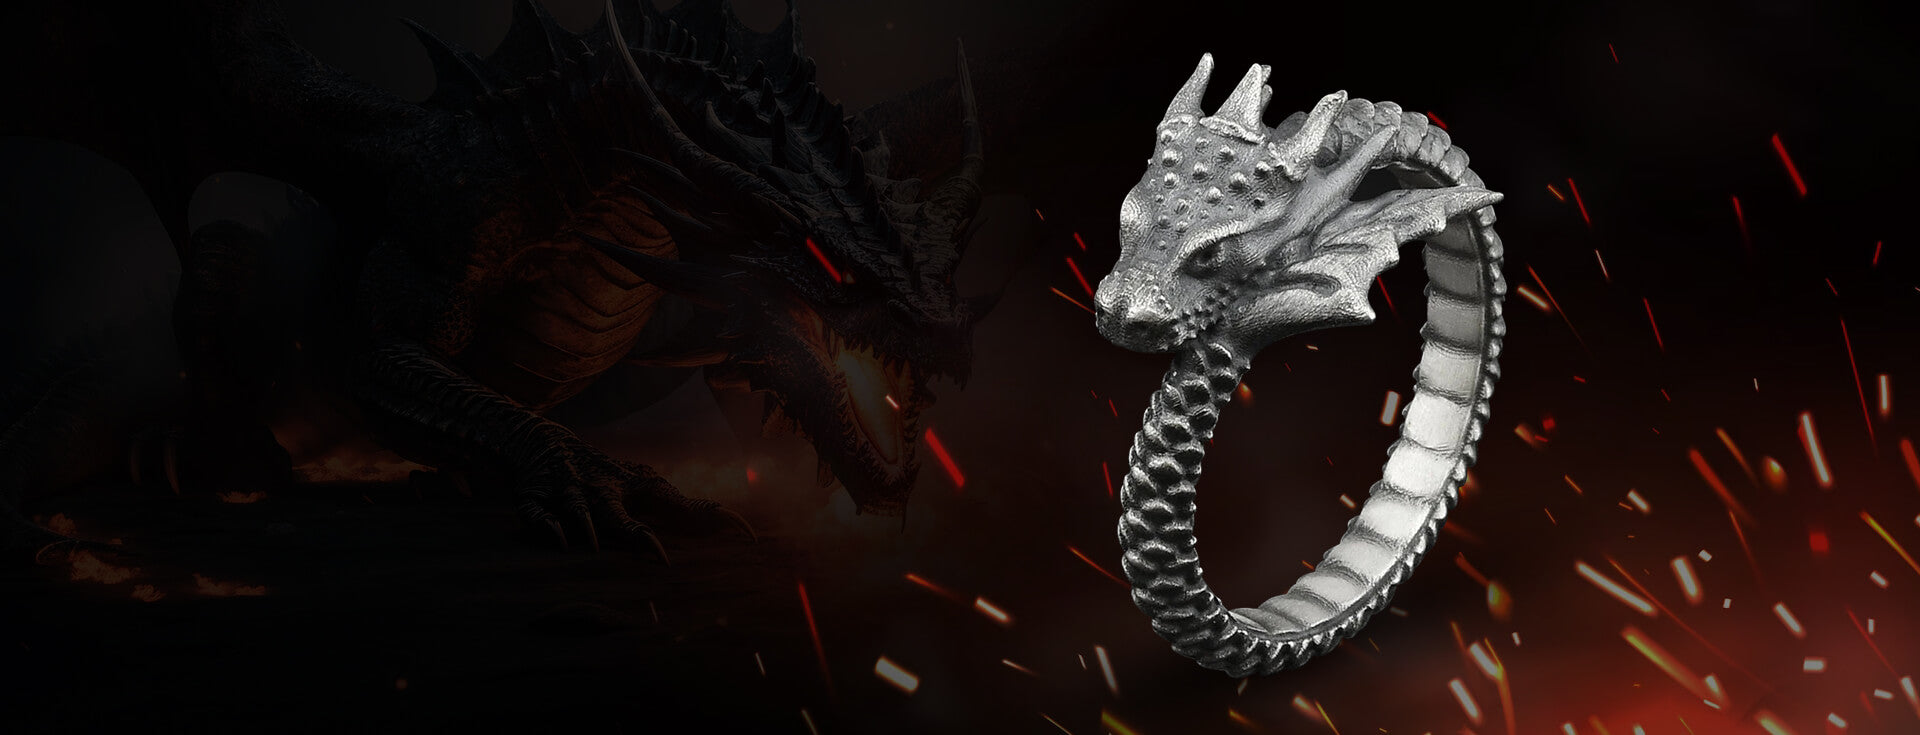 Mystical dragon-shaped jewellery against a dark dragon banner